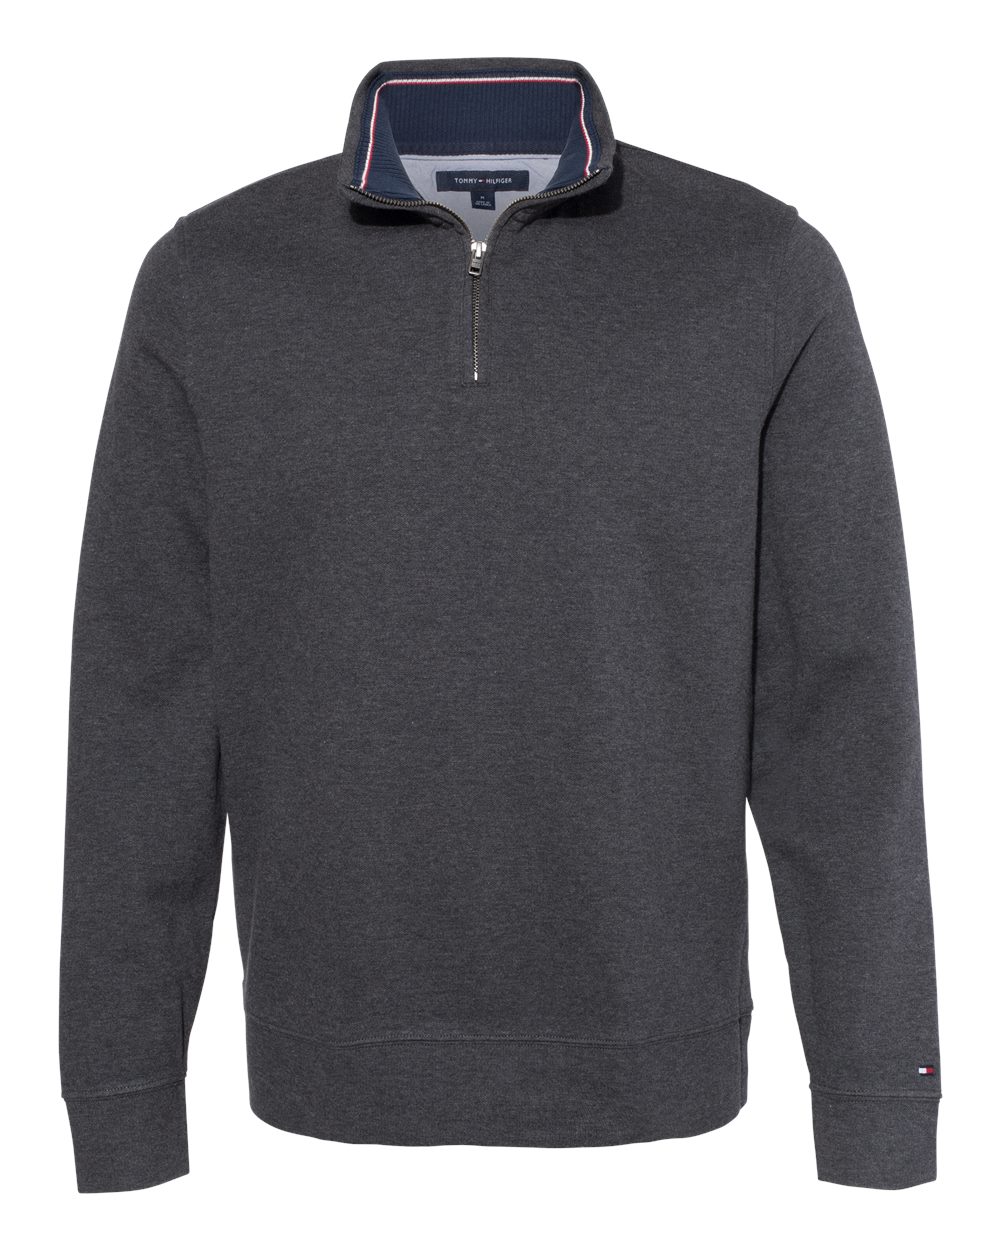 Tommy Hilfiger Quarter-Zip Pullover Sweatshirt #13H1858 Charcoal Grey Heather